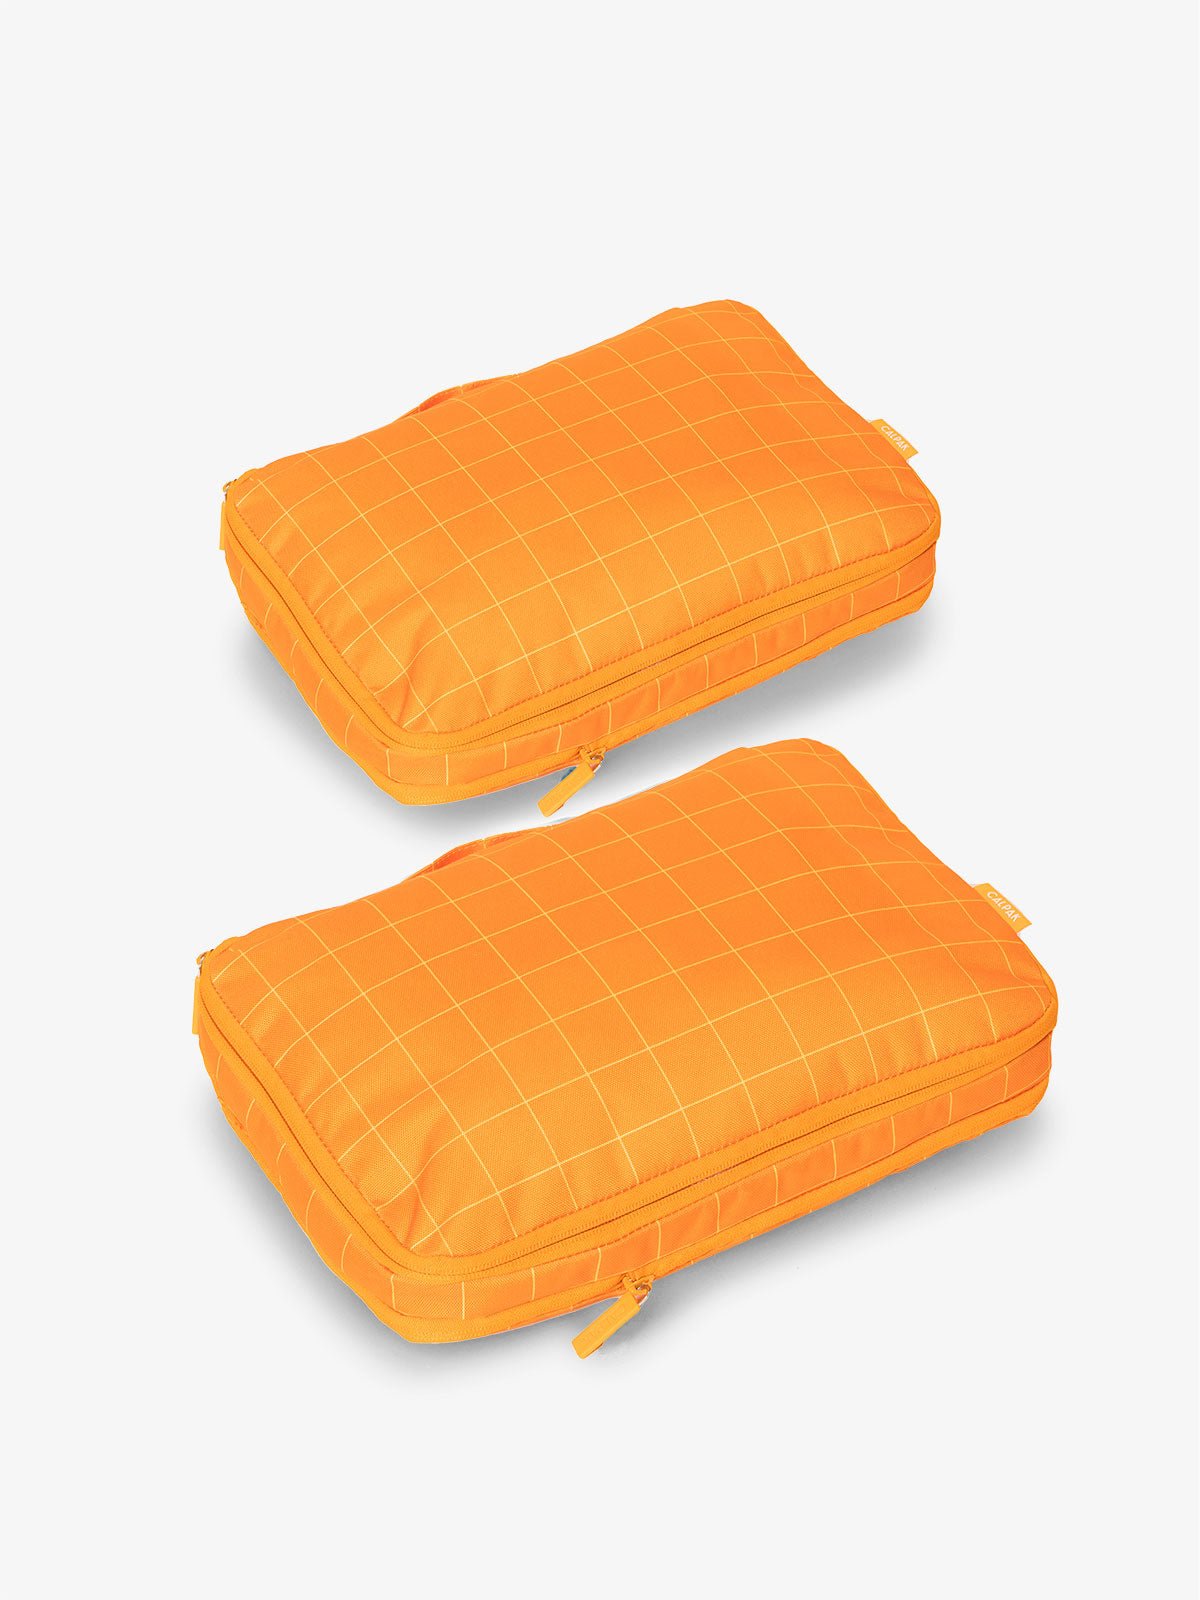 CALPAK compression packing cubes in orange grid